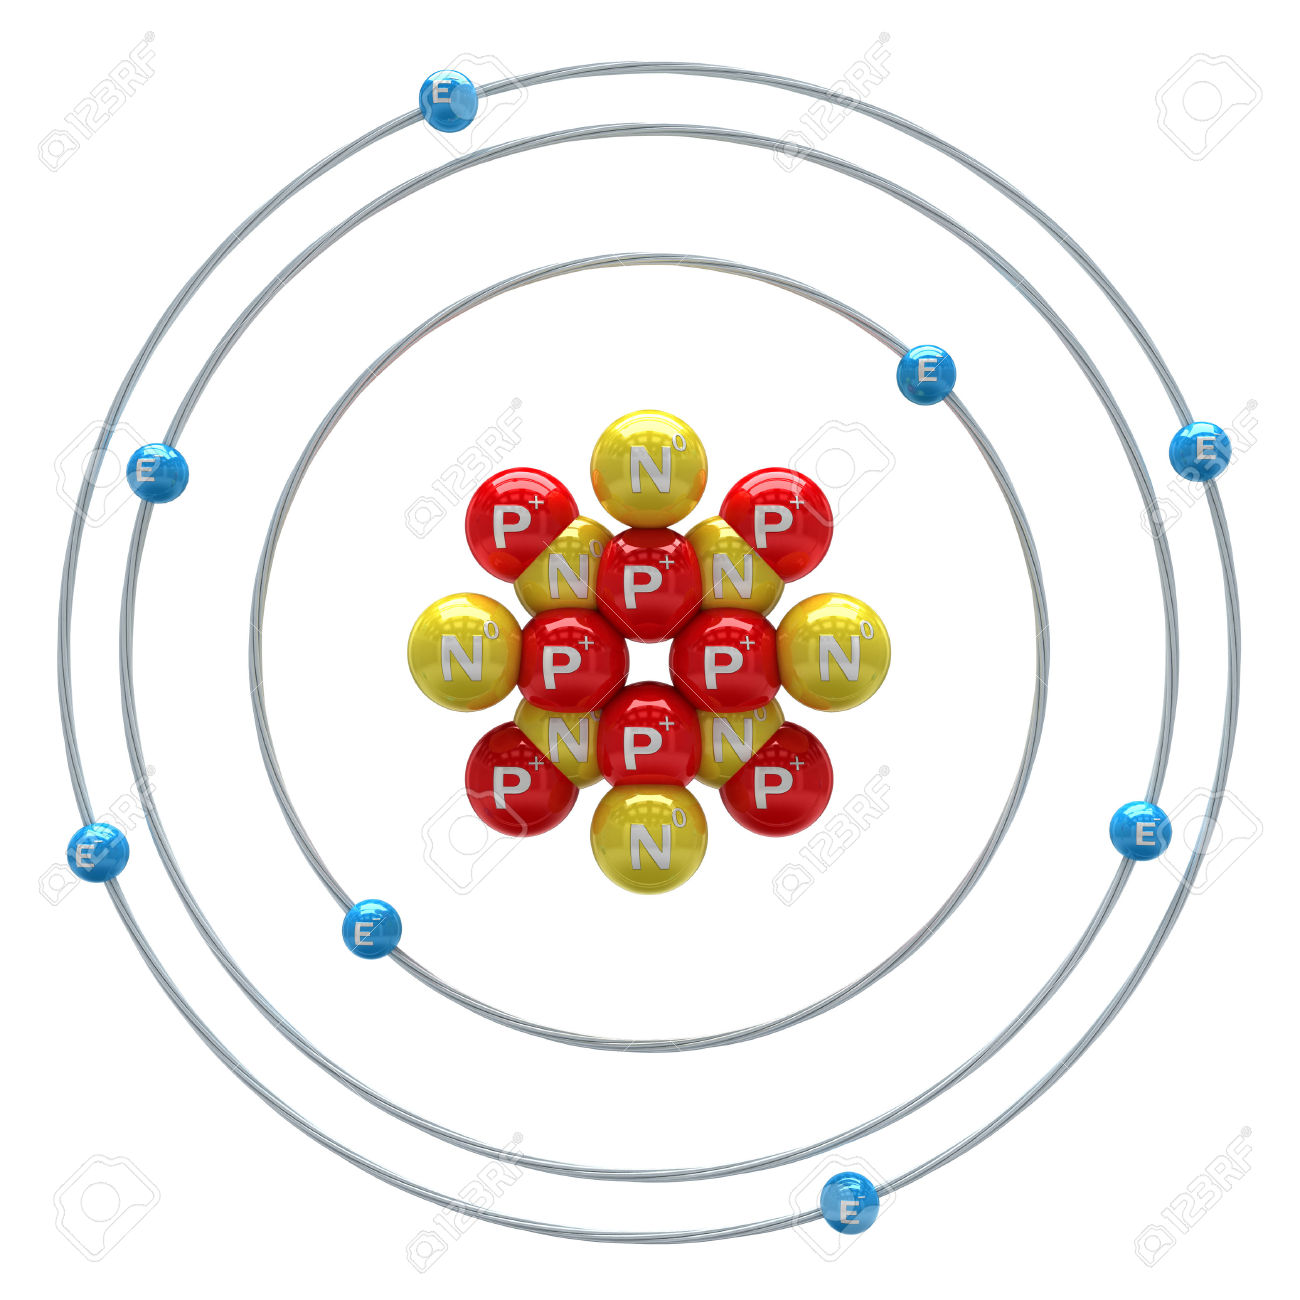 Mr. Miller Courageous Scientists: Unit 2 Chemistry: Day 1 - Atoms